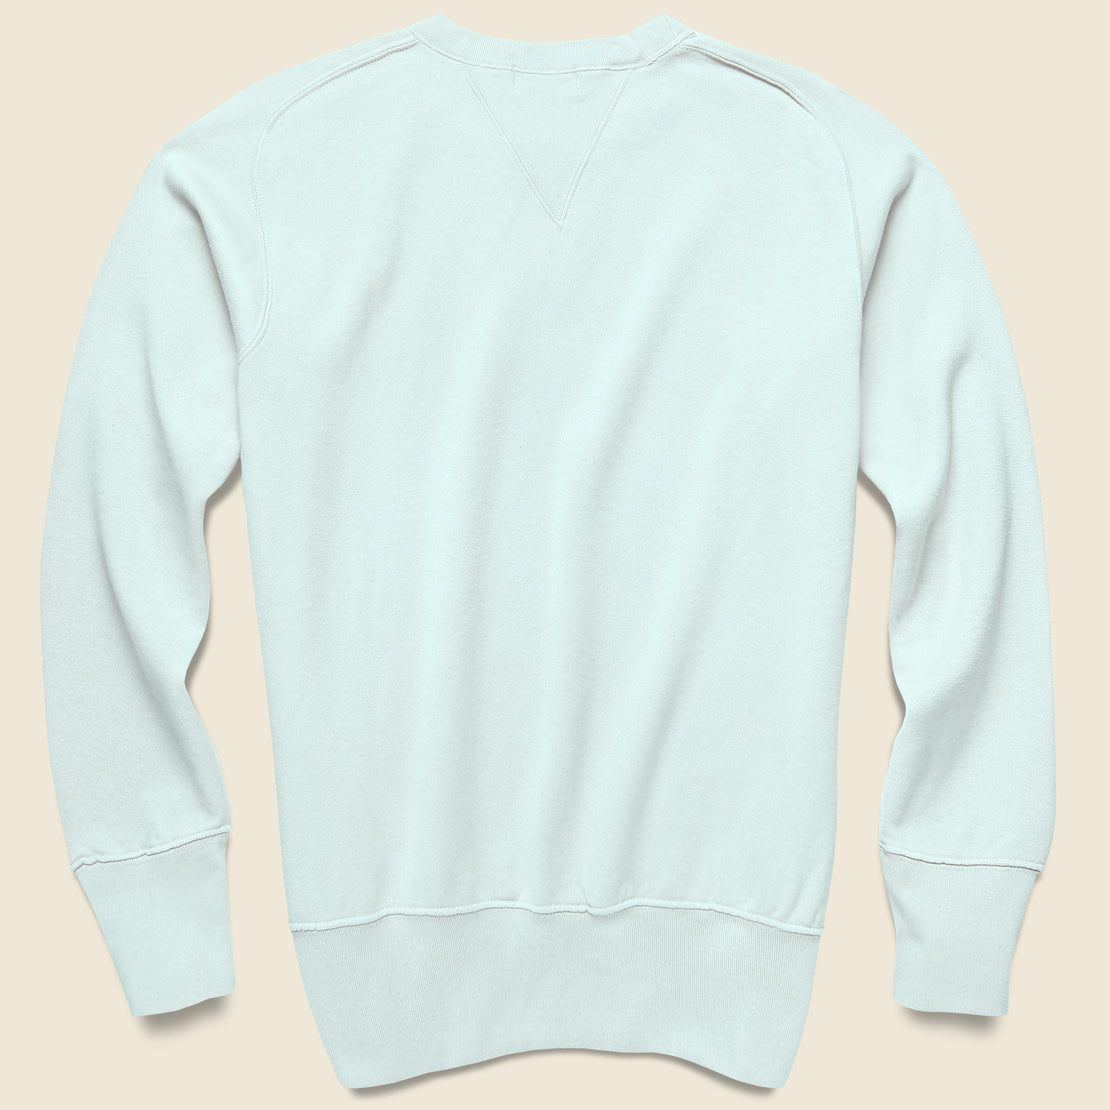 Bay Meadows Sweatshirt - Starlight Blue - Levis Vintage Clothing - STAG Provisions - Tops - Fleece / Sweatshirt